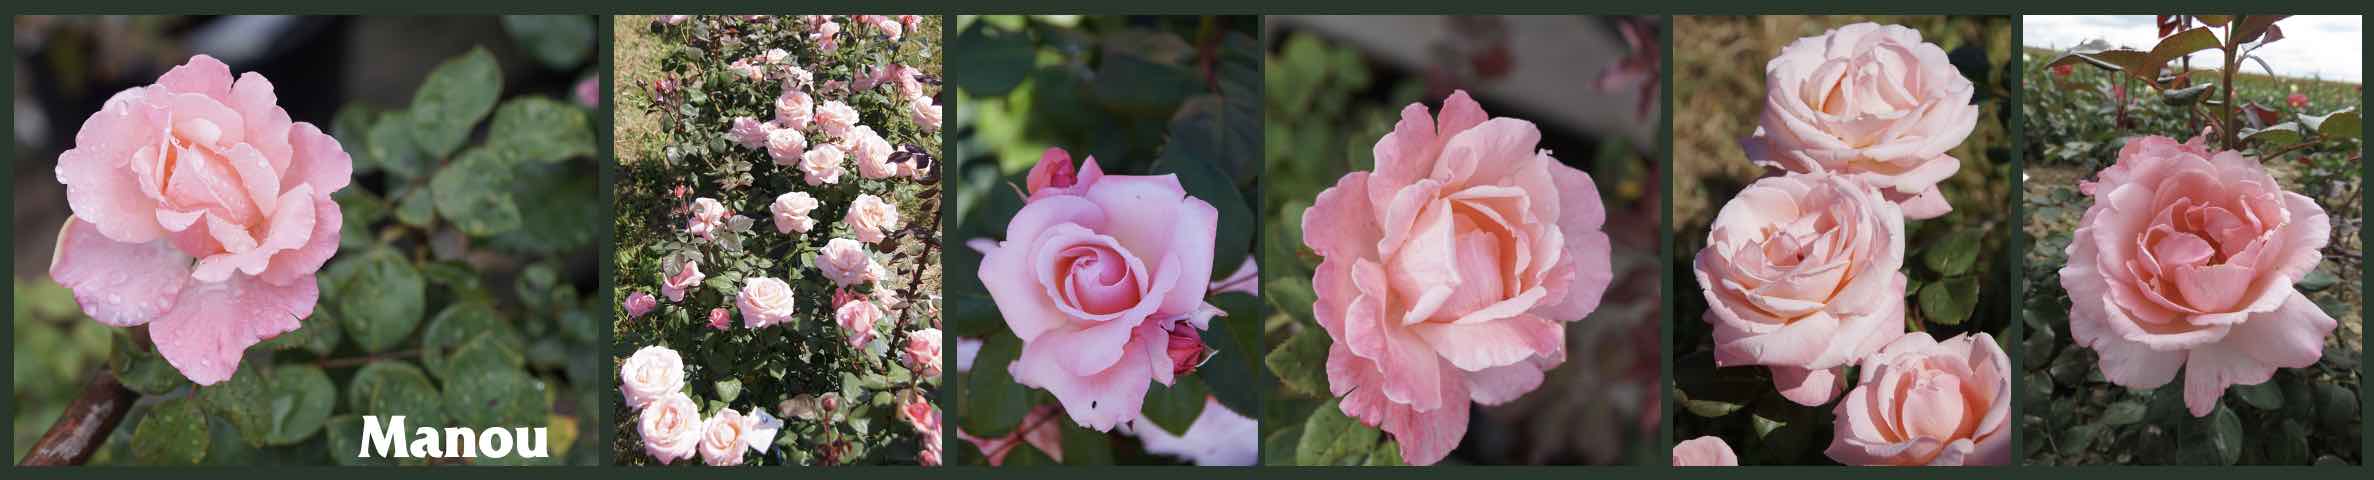 Rose Manou - Donner son nom a une rose - Guillot®